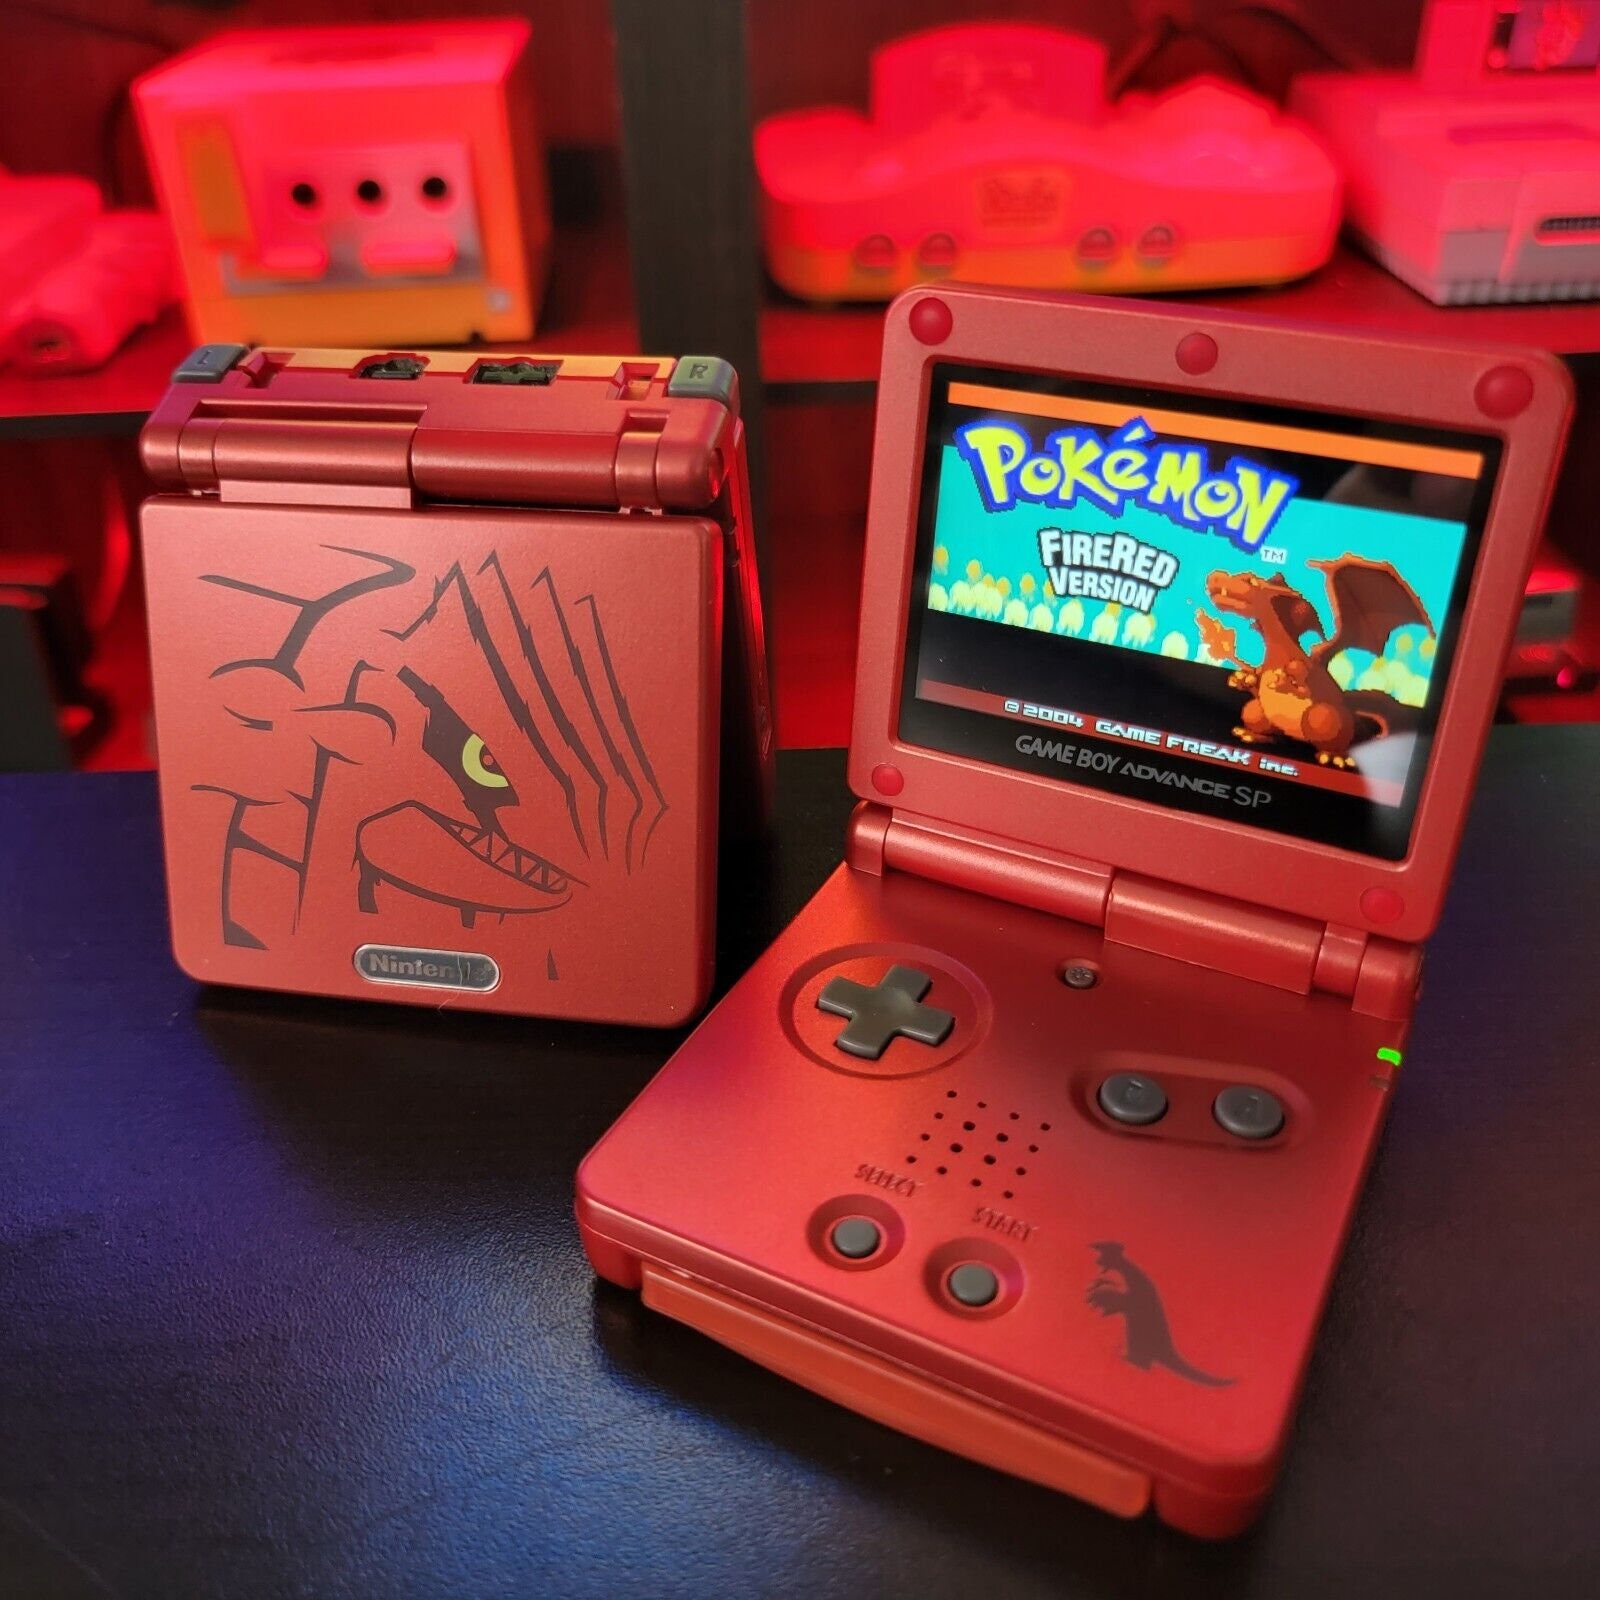 Game Boy Advance Video : Pokémon, Volume 2 [USA] - Nintendo Gameboy Advance  (GBA) rom download